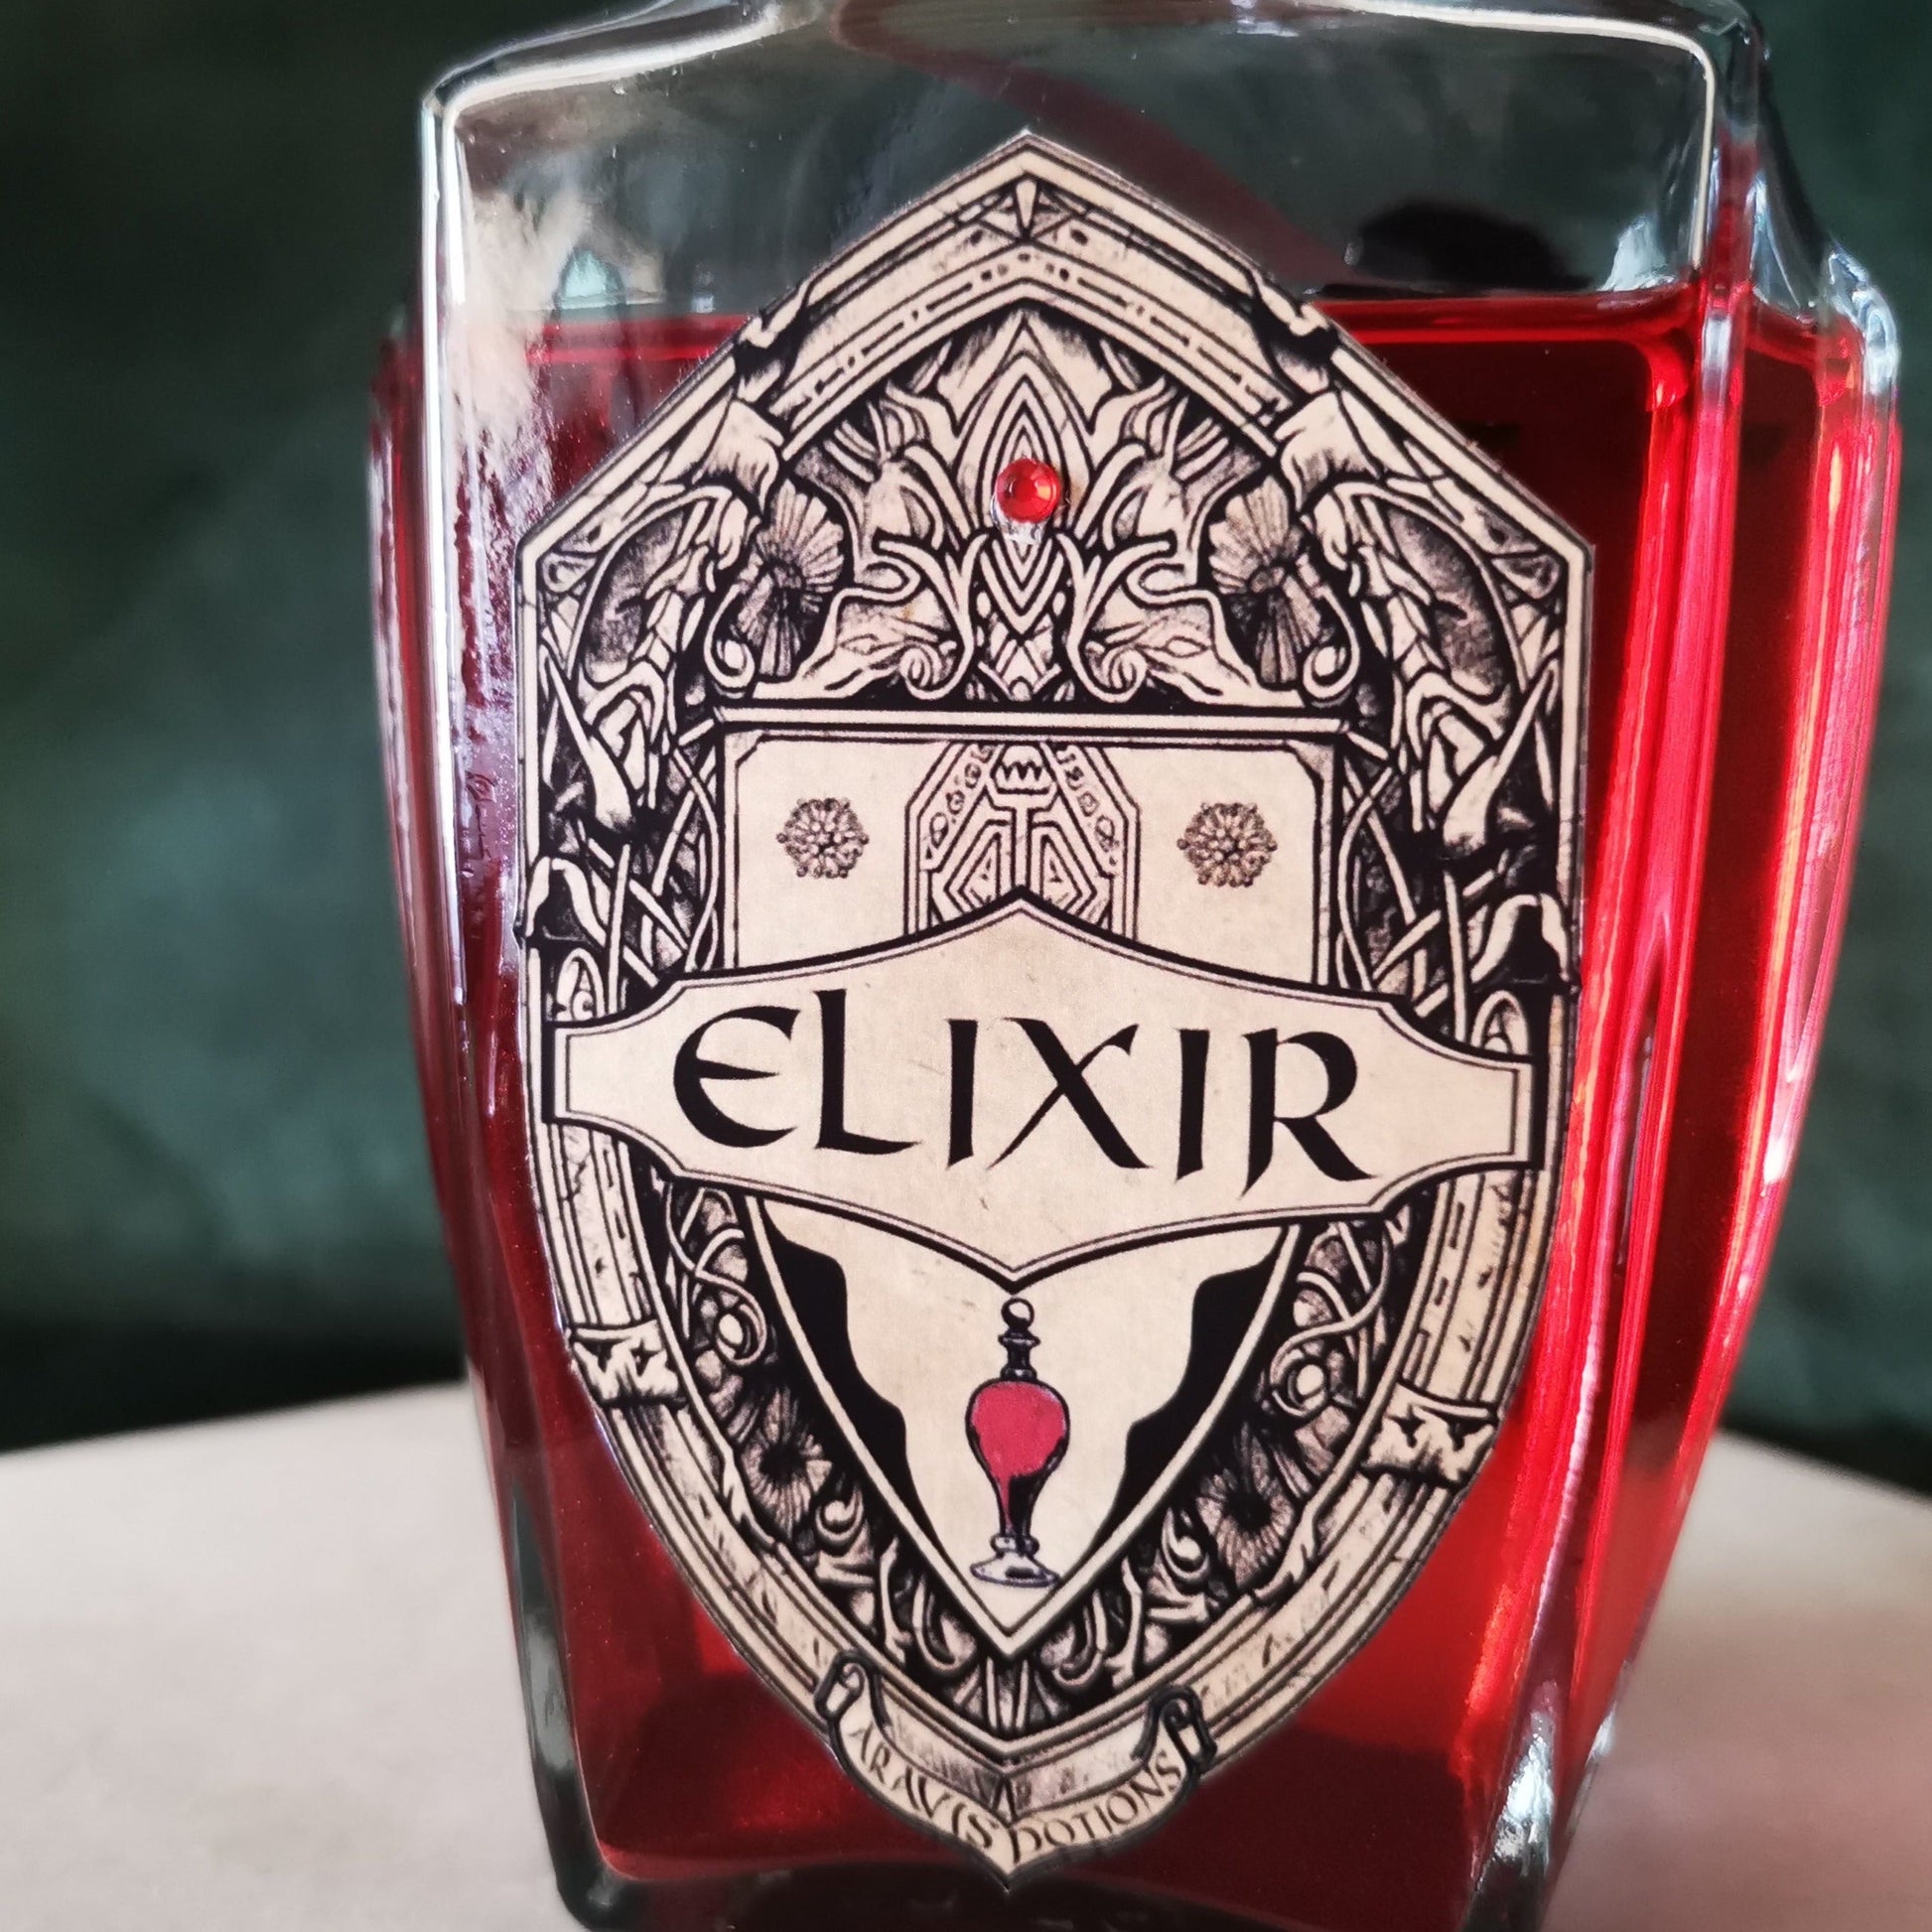 Elixir - Final Fantasy Aravis Potions Apothecary Harry Potter